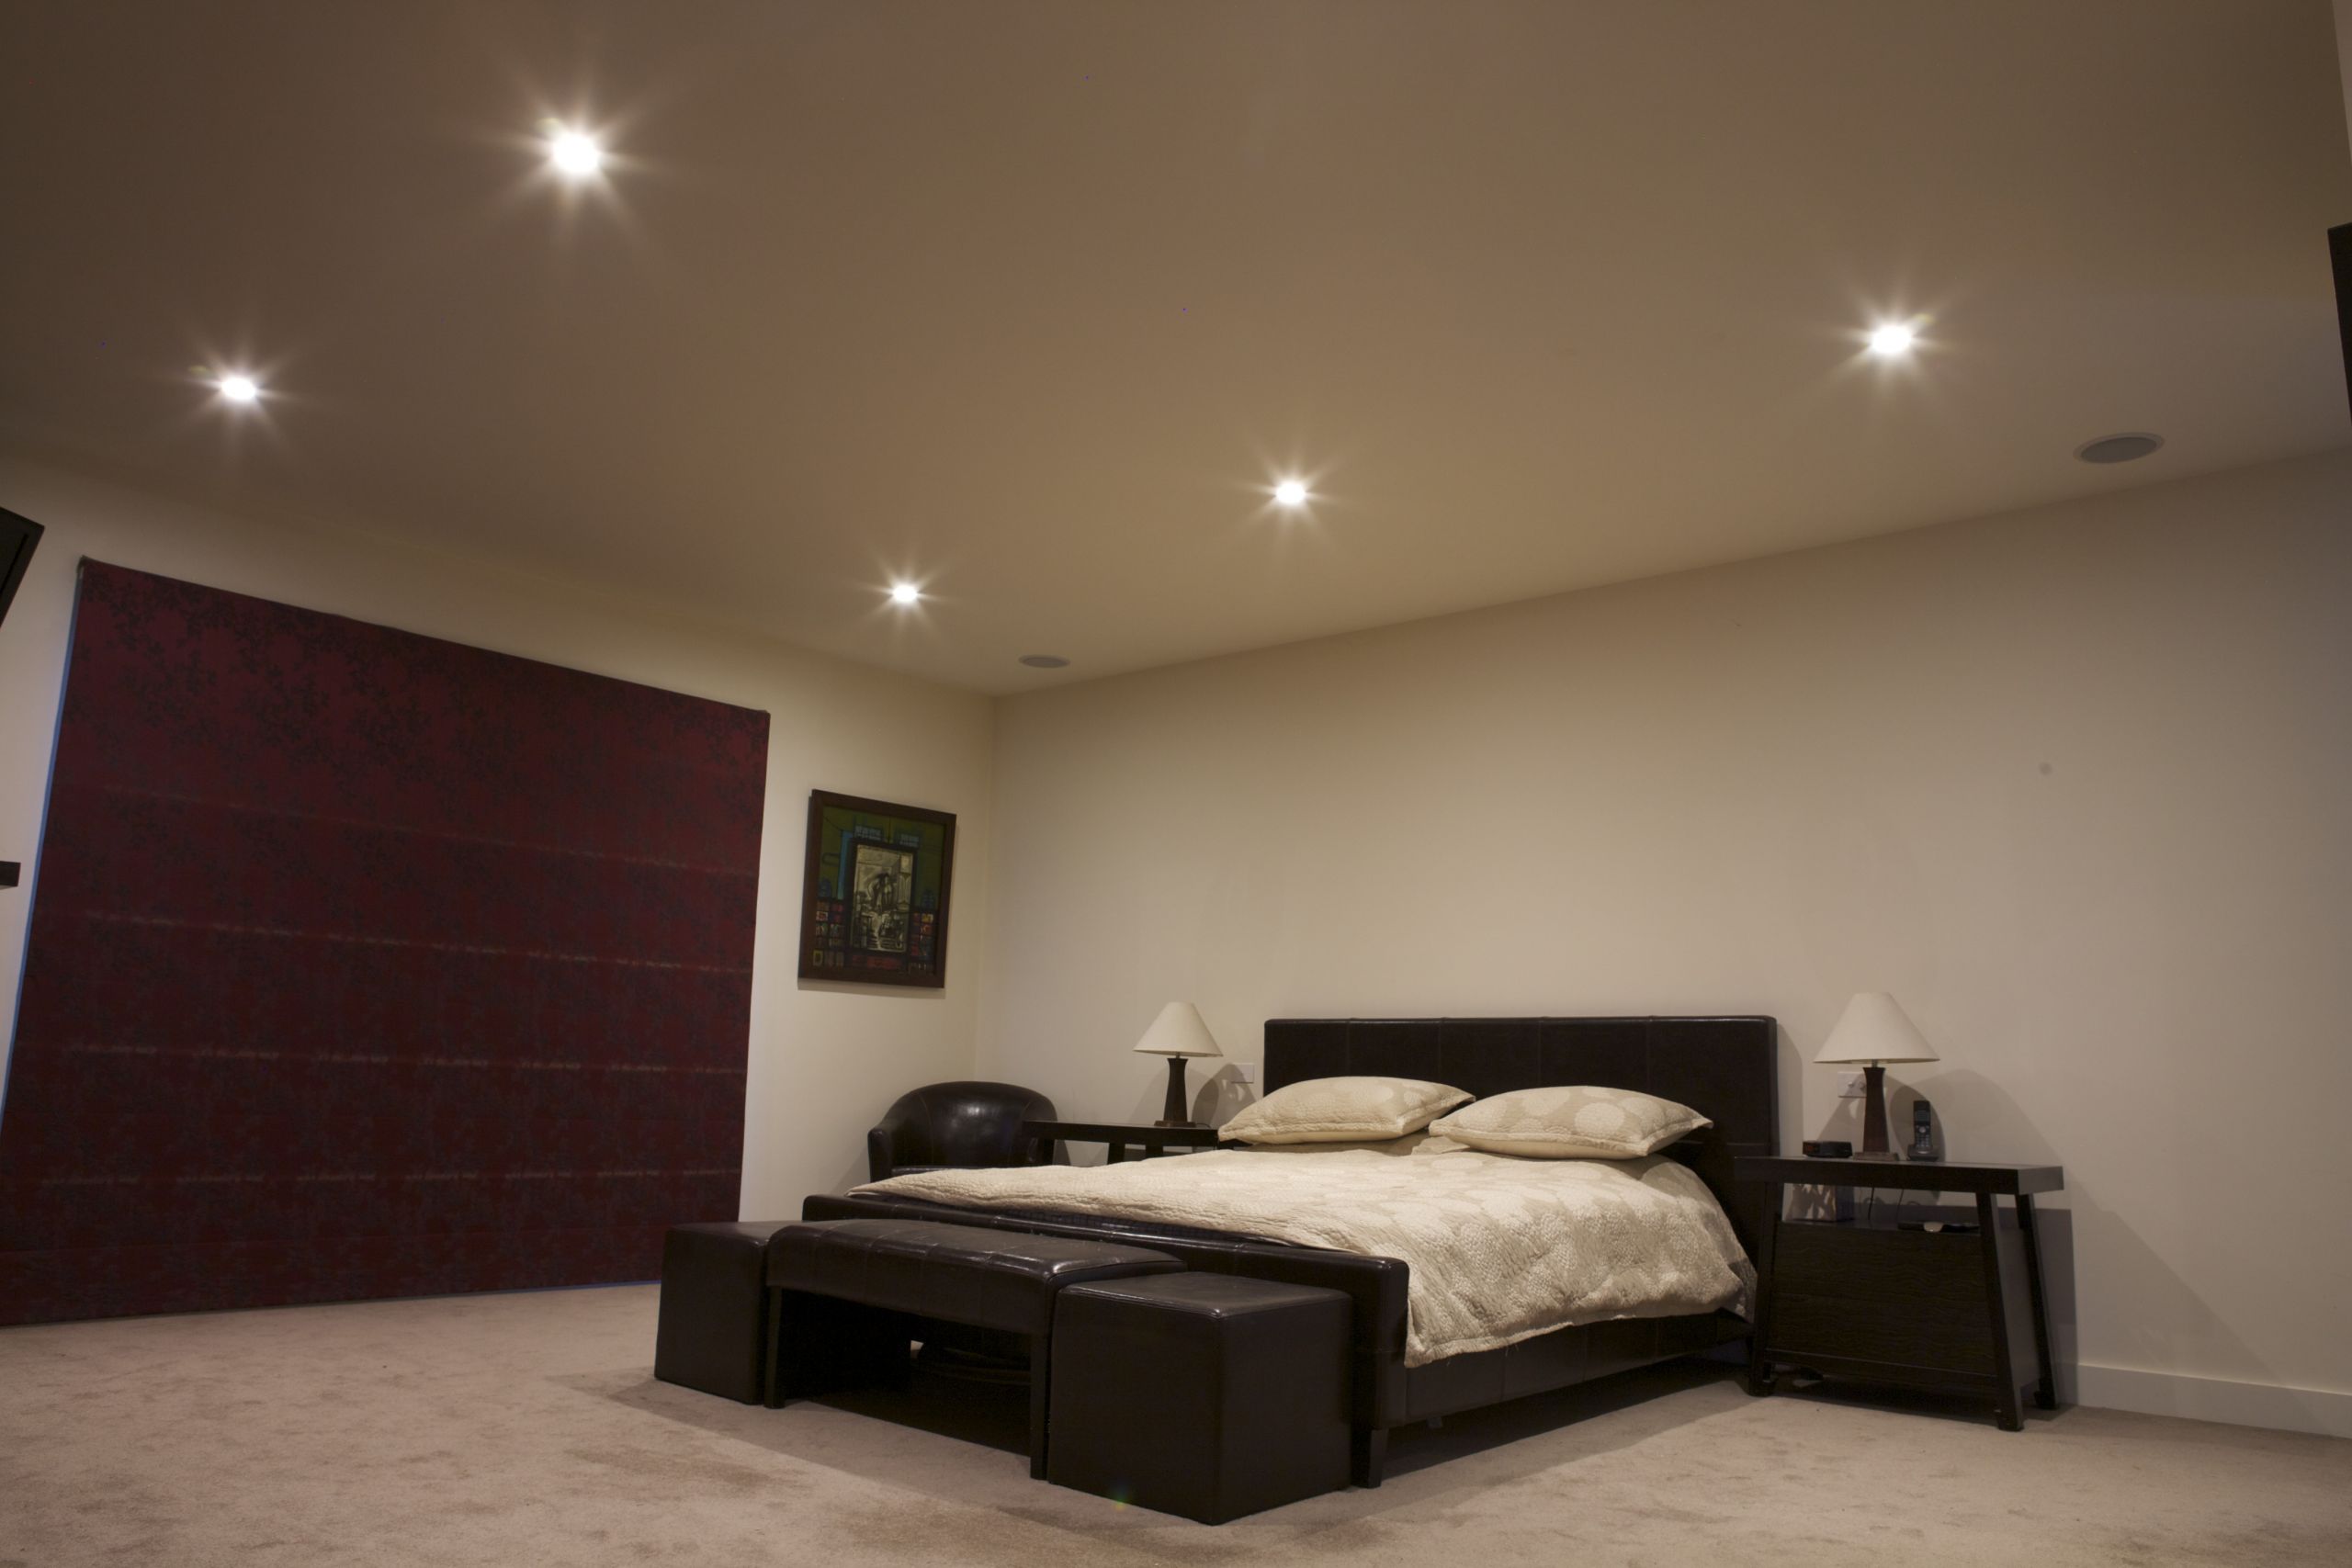 Led Lighting For Bedroom
 70mm or 90mm Downlights Choosing LED lights